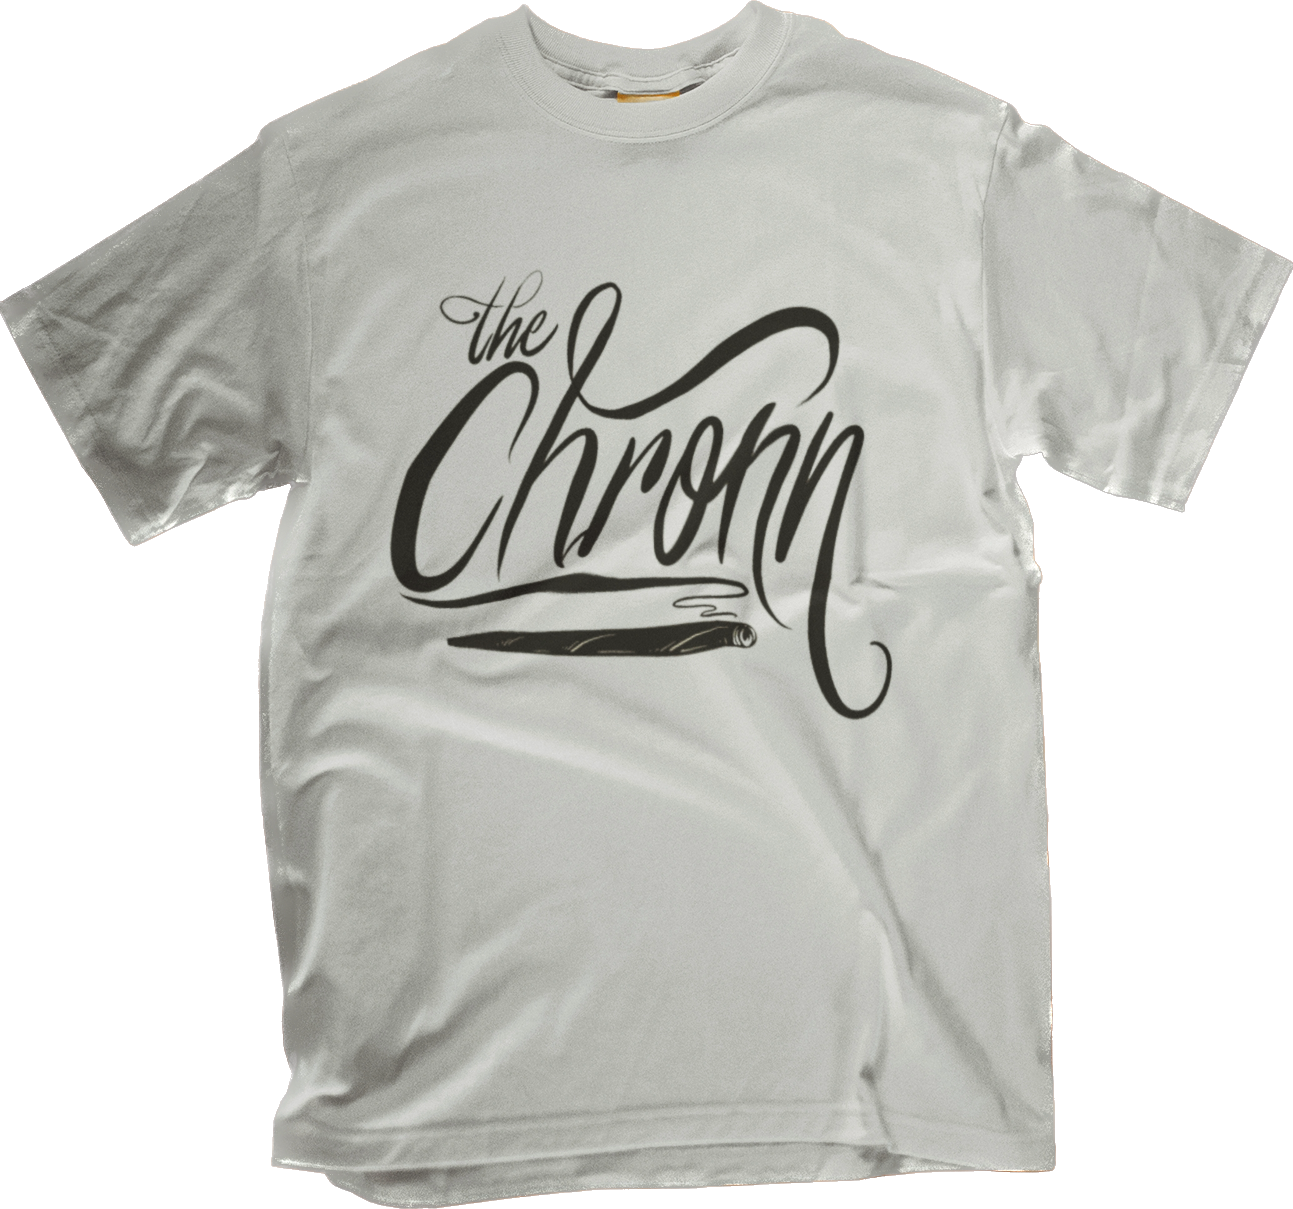 The Chronn Handwritten Logo on White Tee